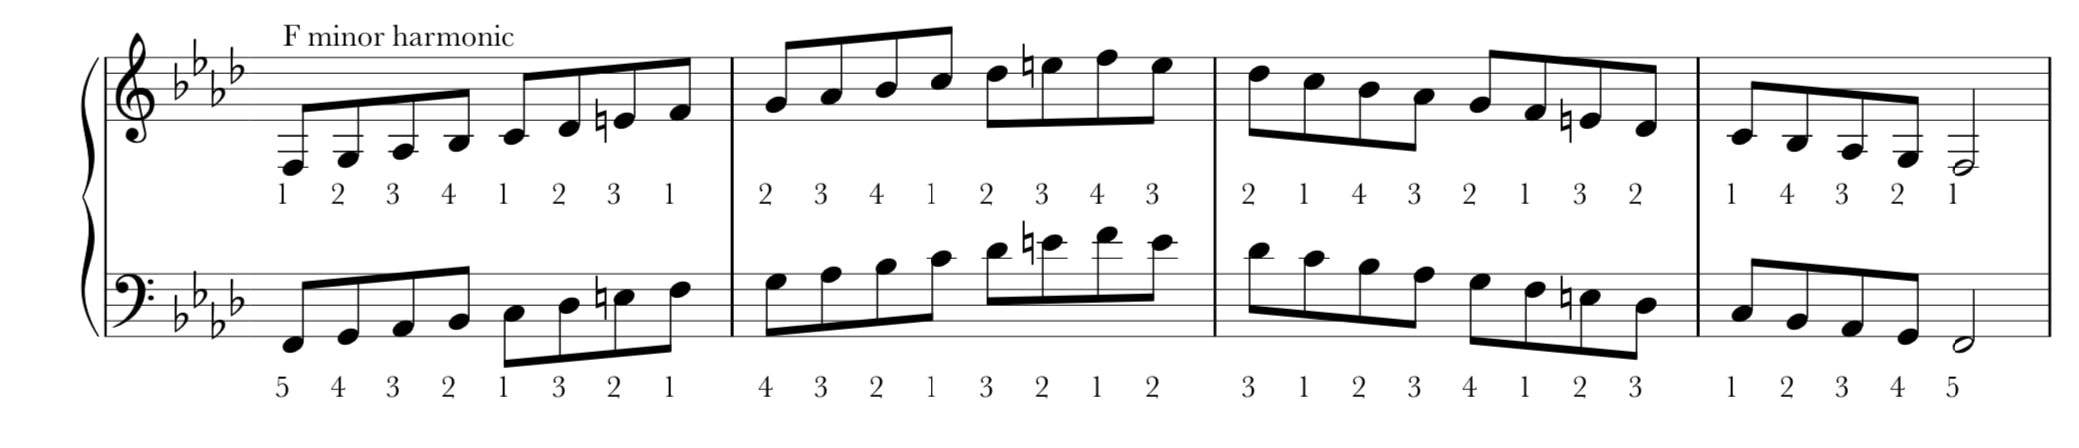 e harmonic minor scale bass clef